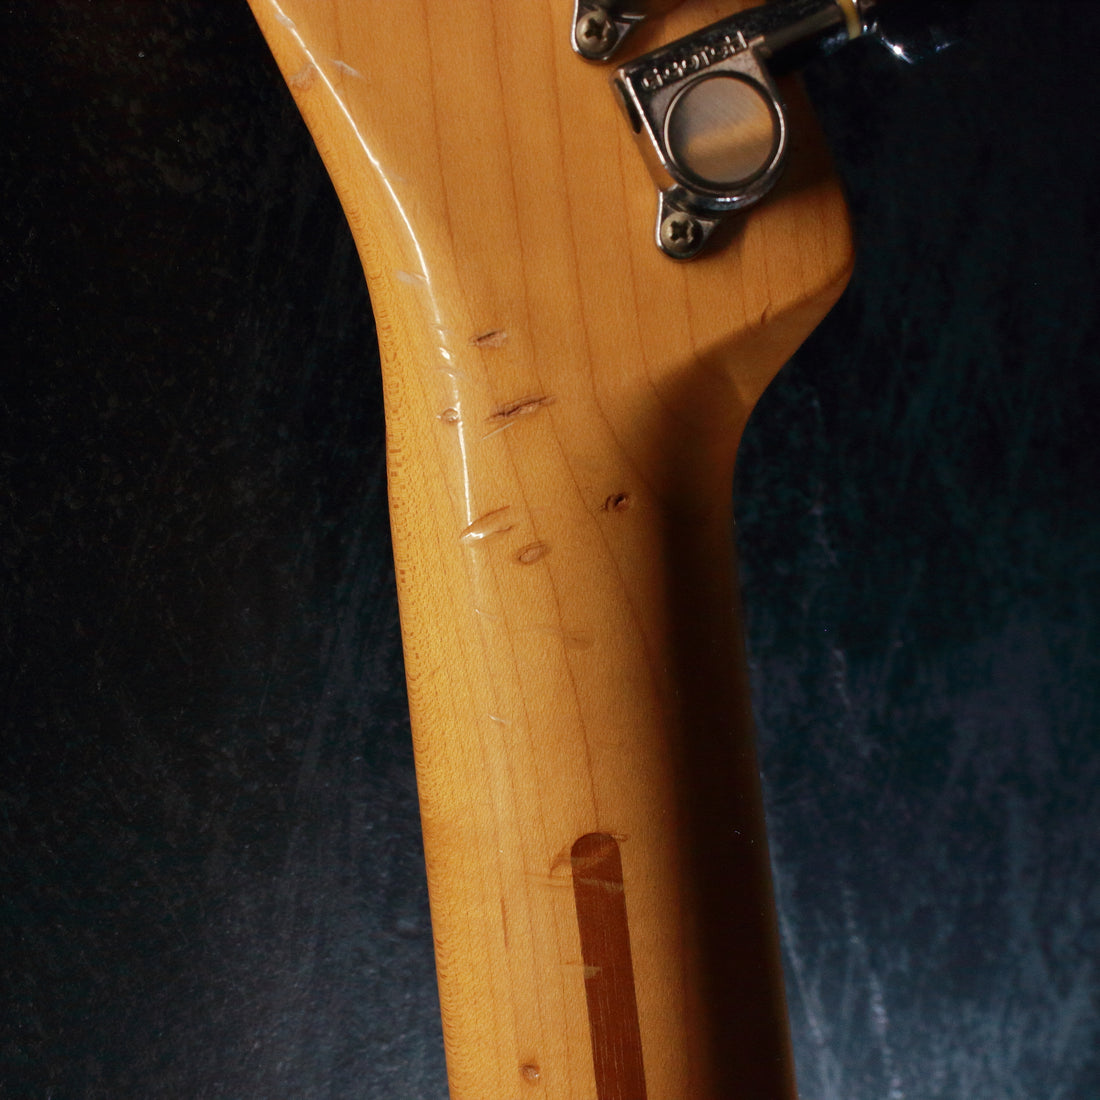 Fender Japan '72 Telecaster TL72-58 Butterscotch Blonde 1993